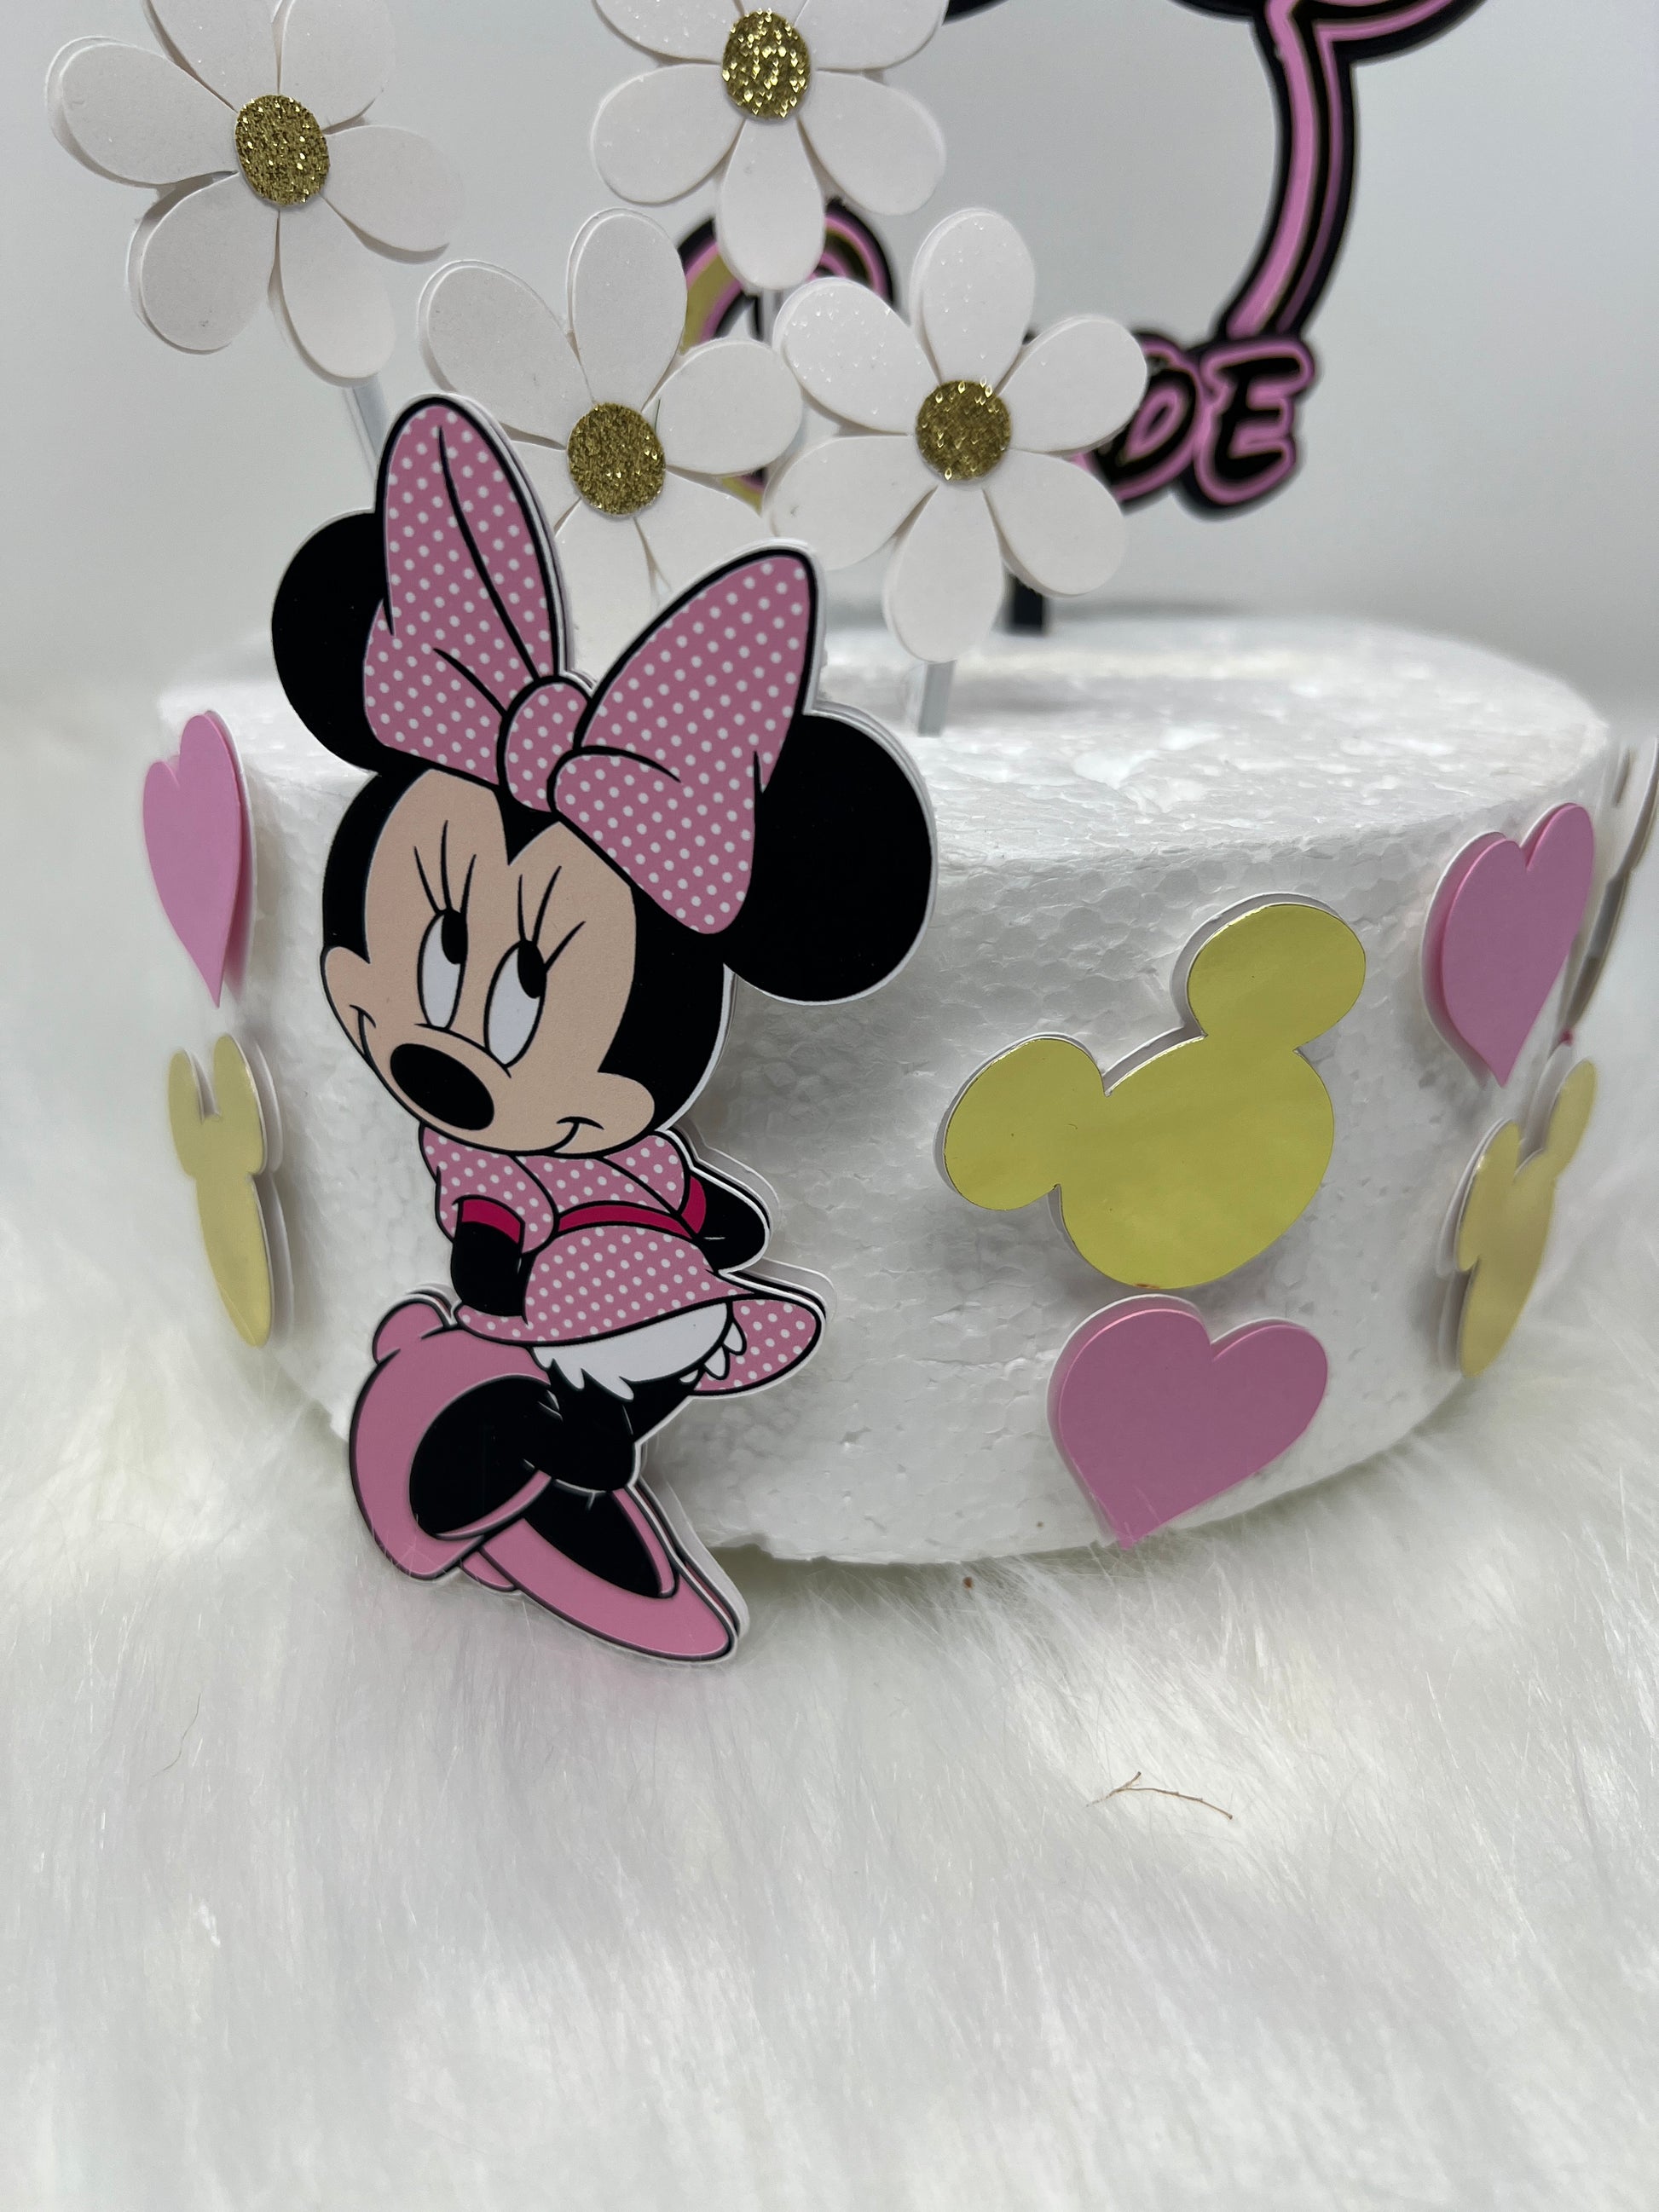 Globo Minnie Mouse Rosa 14 